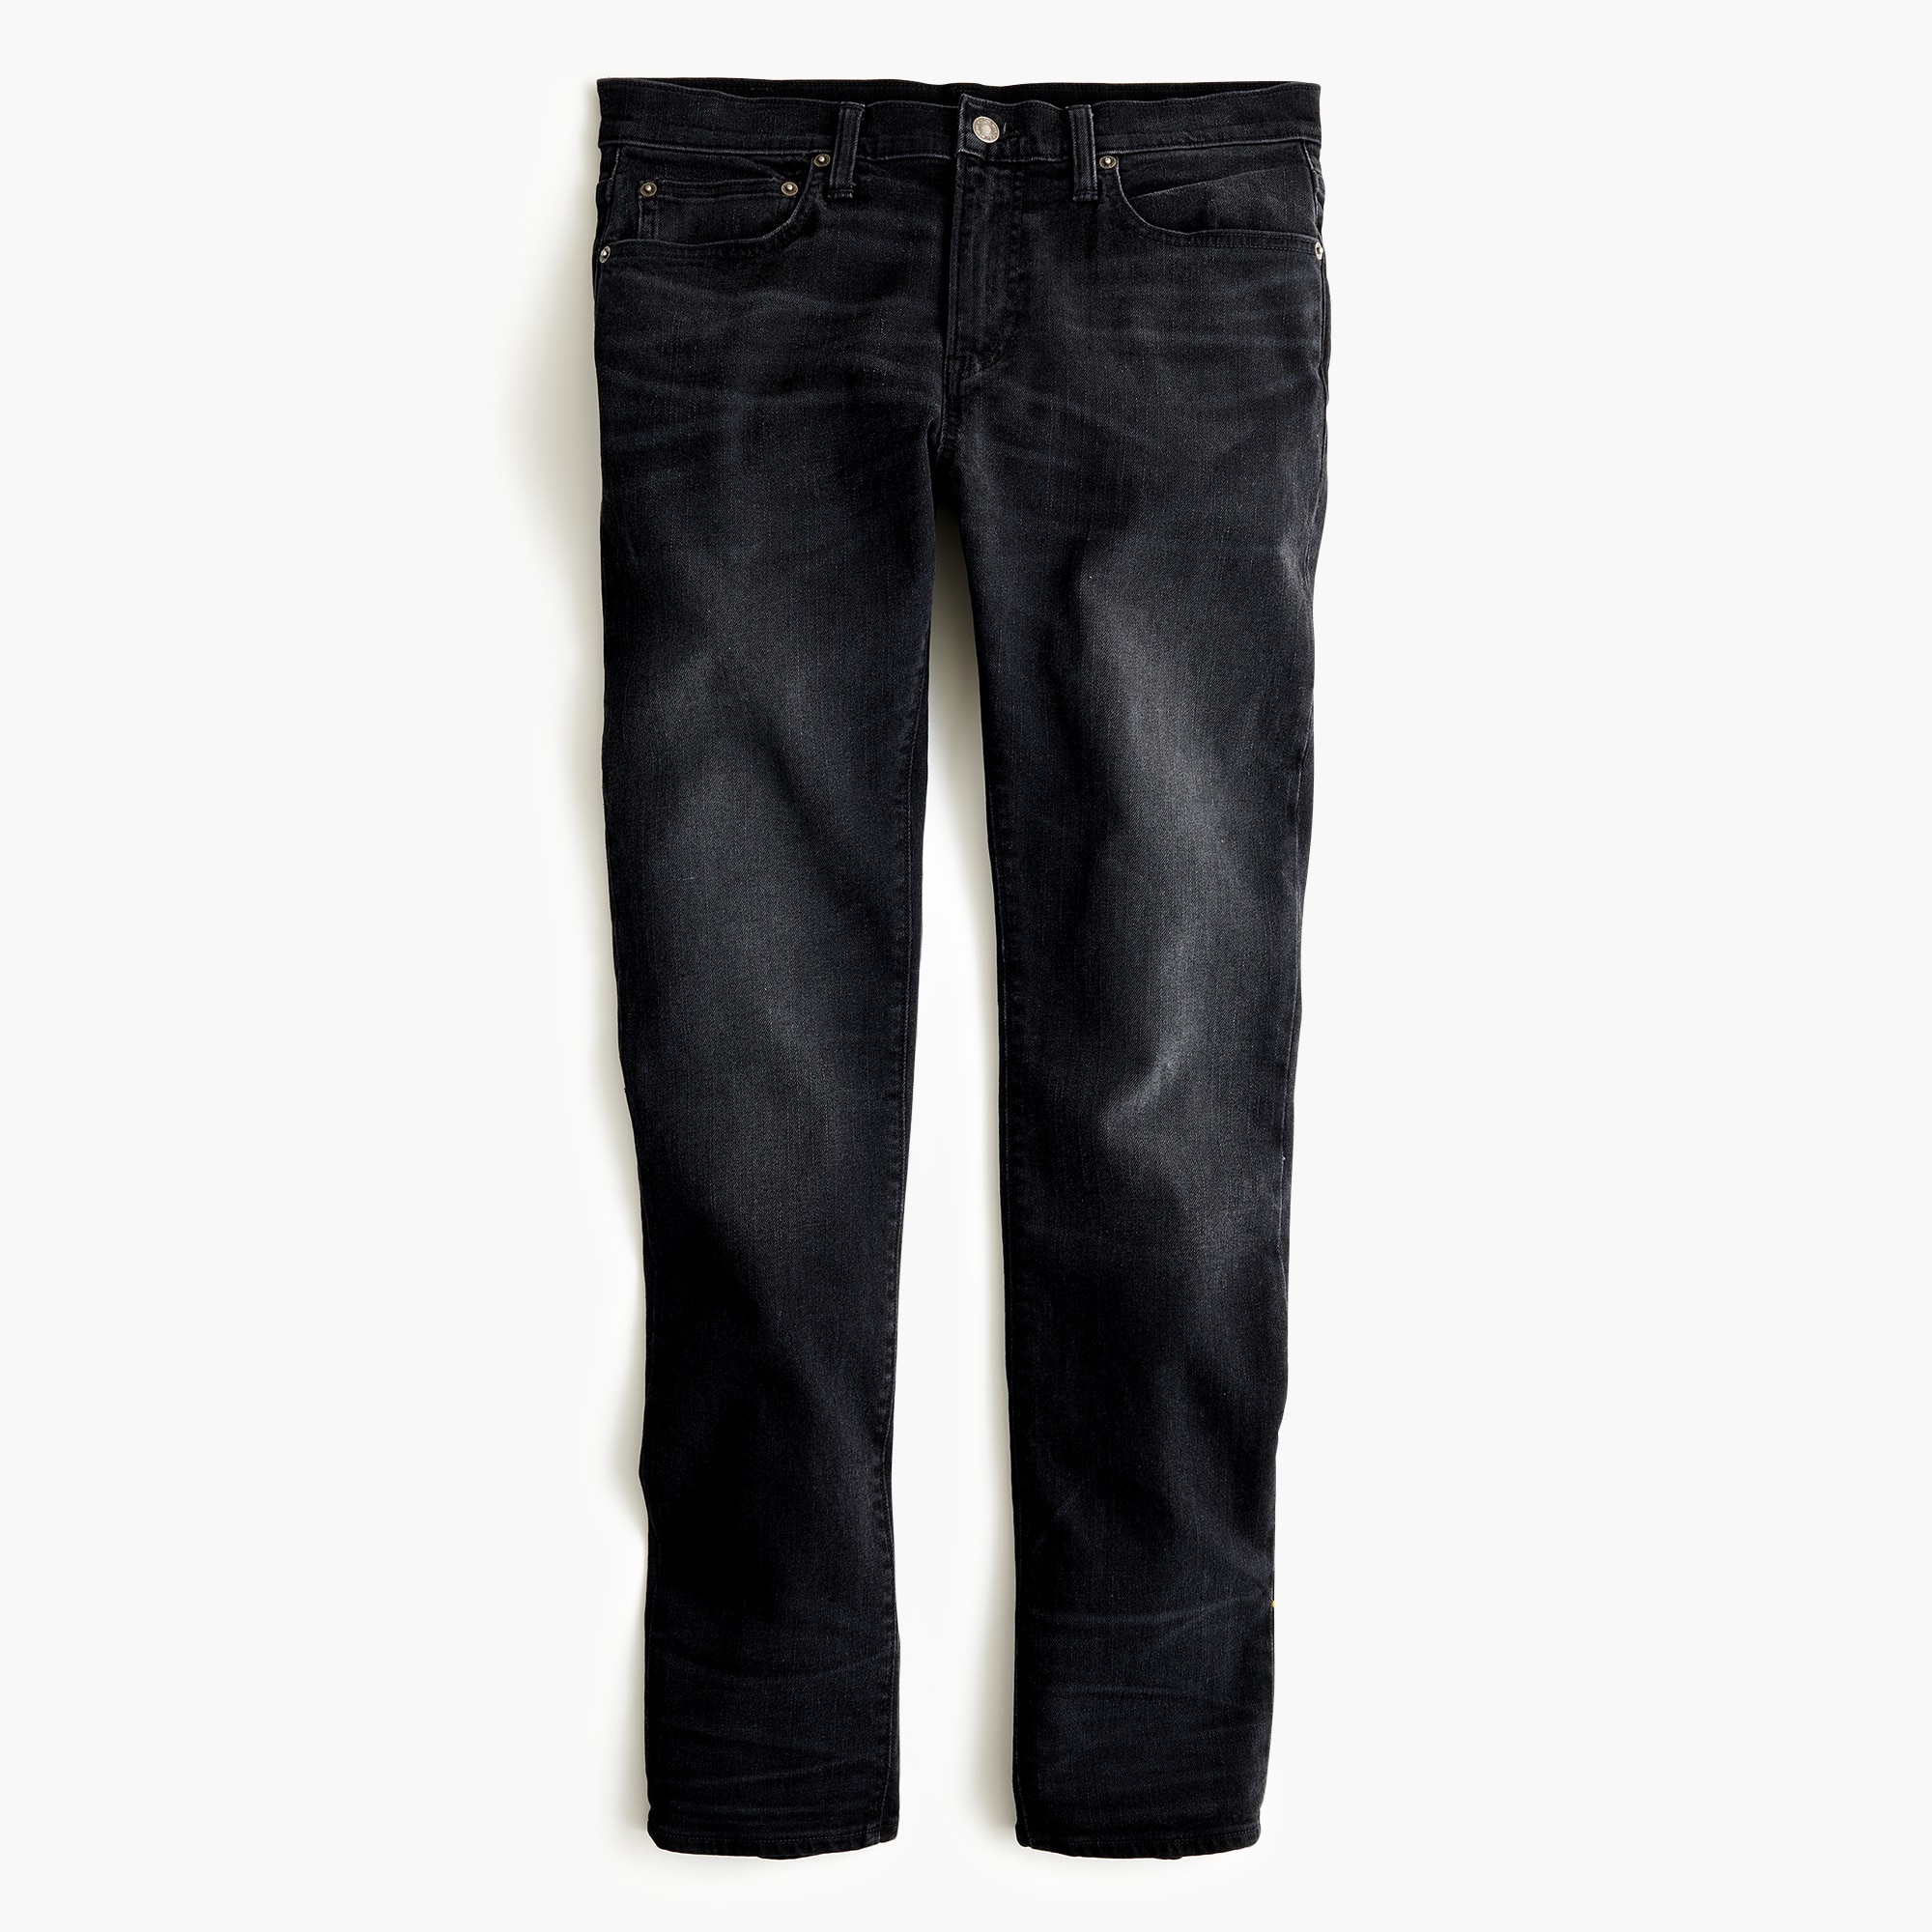 buy black jeans mens